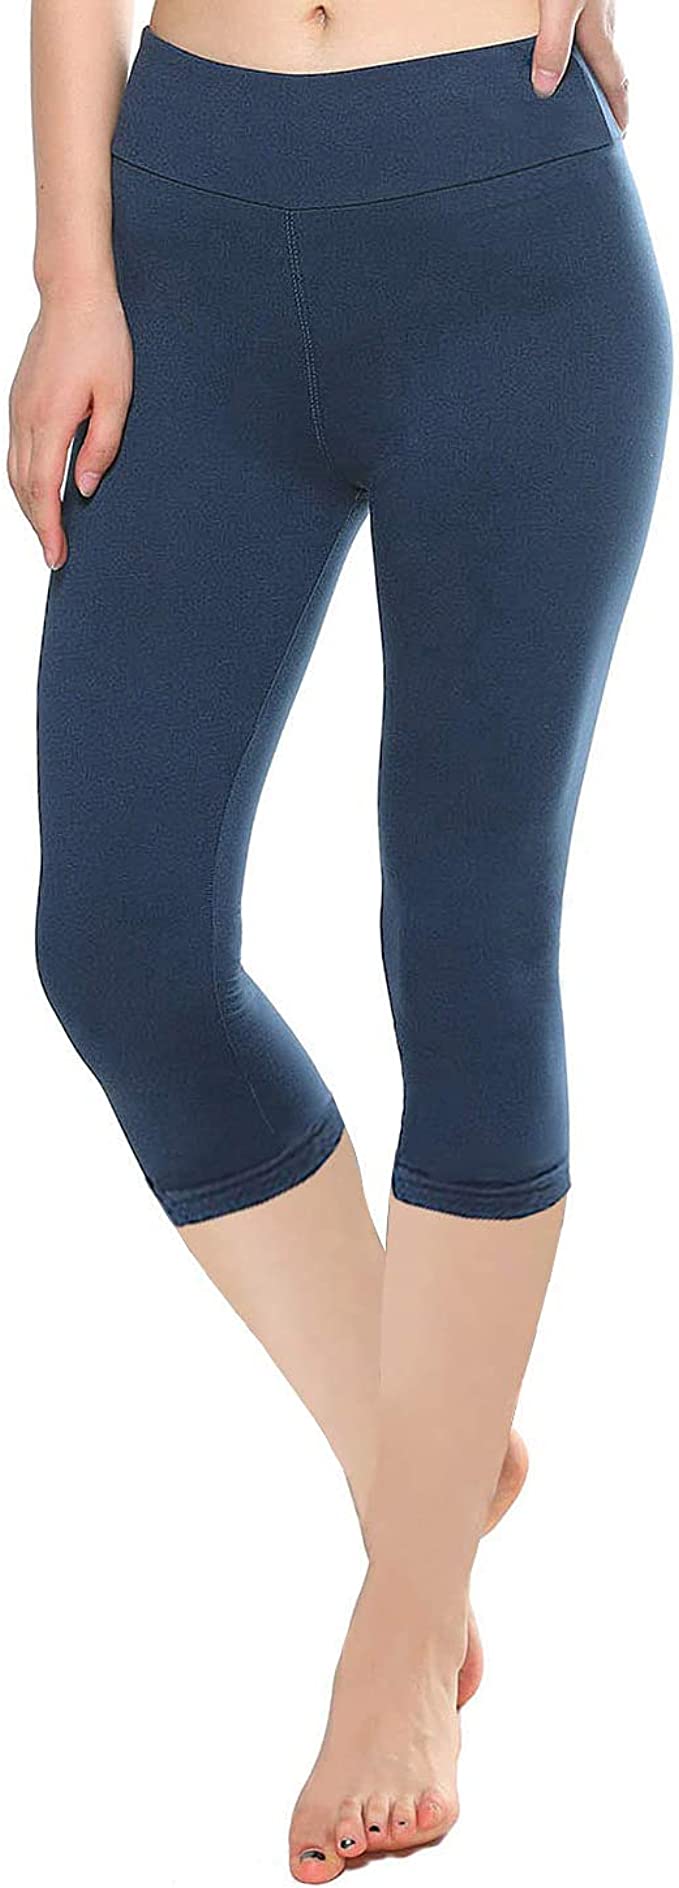 KT Buttery Soft Capri Leggings for Women - High Waisted Capri Pants with Pockets - Reg & Plus Size - 10  Colors